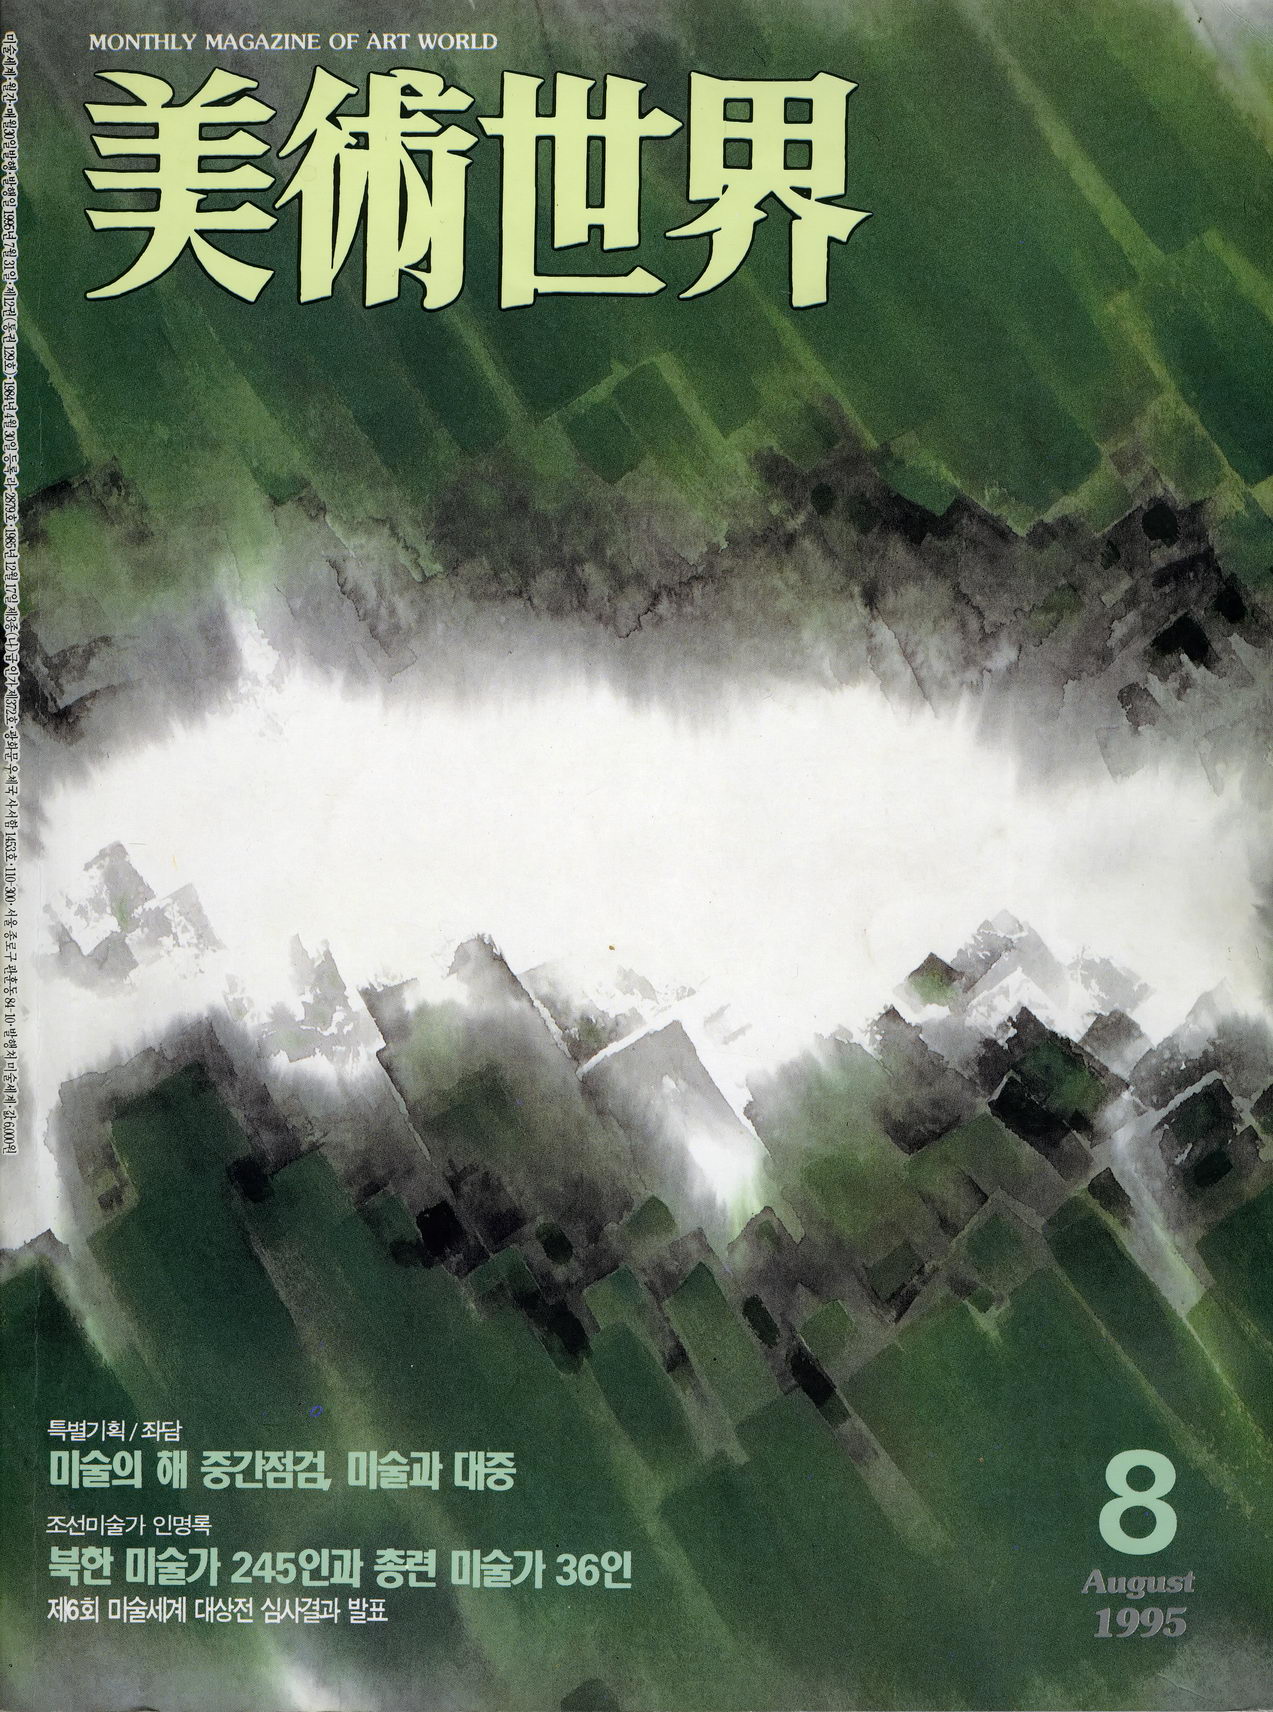 monthly magazine of art world 8, august 1995, seoul, südkorea